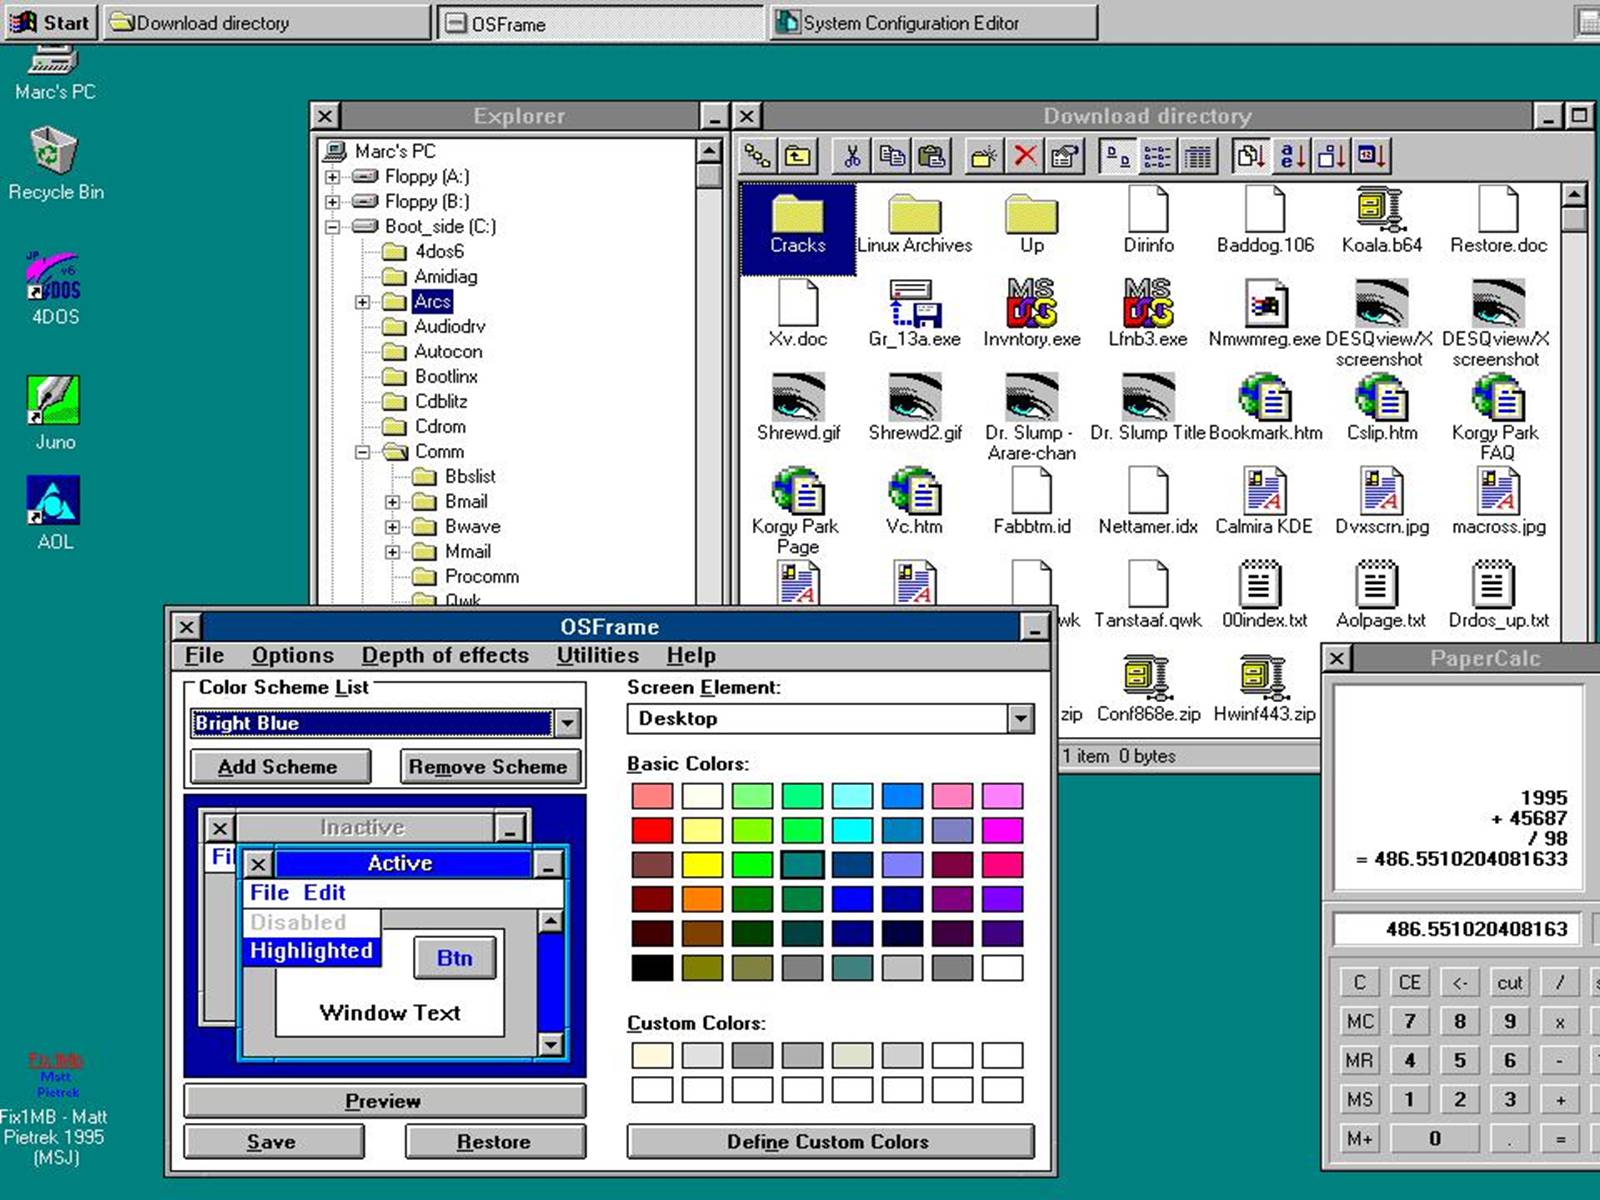 Windows 1.3. ОС виндовс 3.0. Windows NT 3.1 Интерфейс. Windows 3.11 Интерфейс. Изображение интерфейса ОС Windows 3.1.